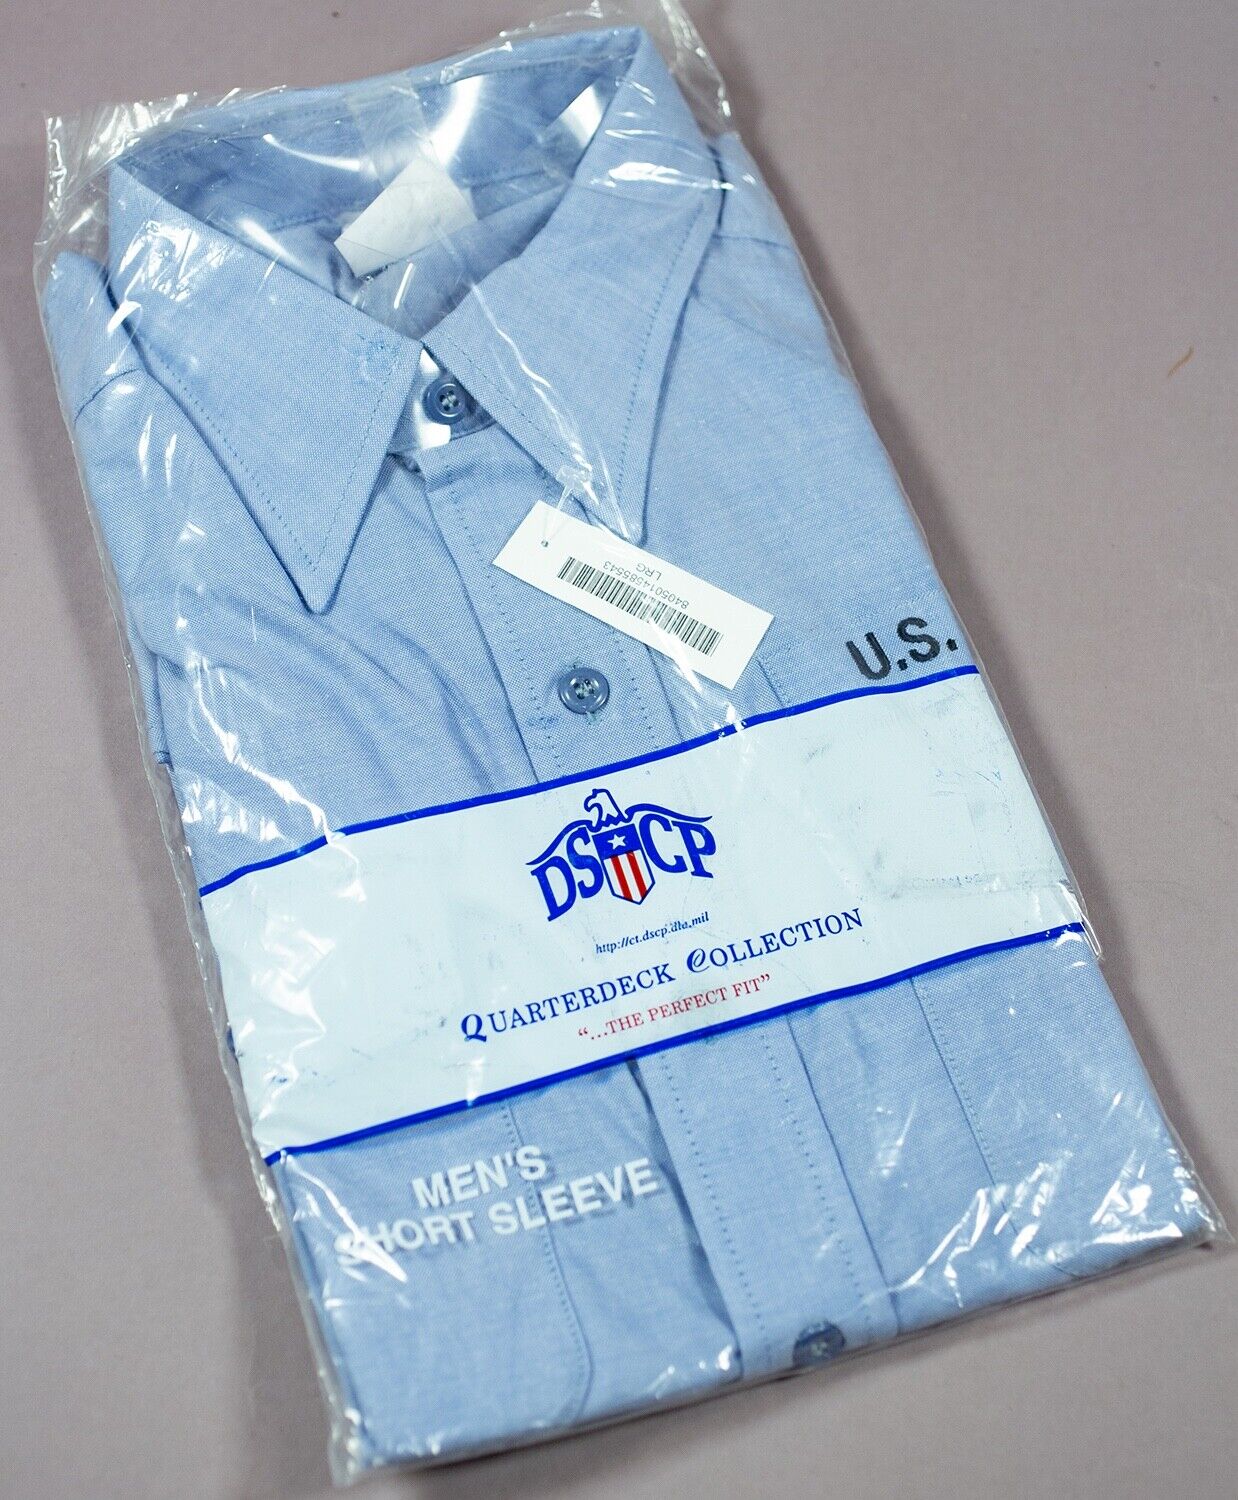 DSCP US Navy Quarterdeck Collection Men\'s Short Sleeve Shirt - Blue  Large - New